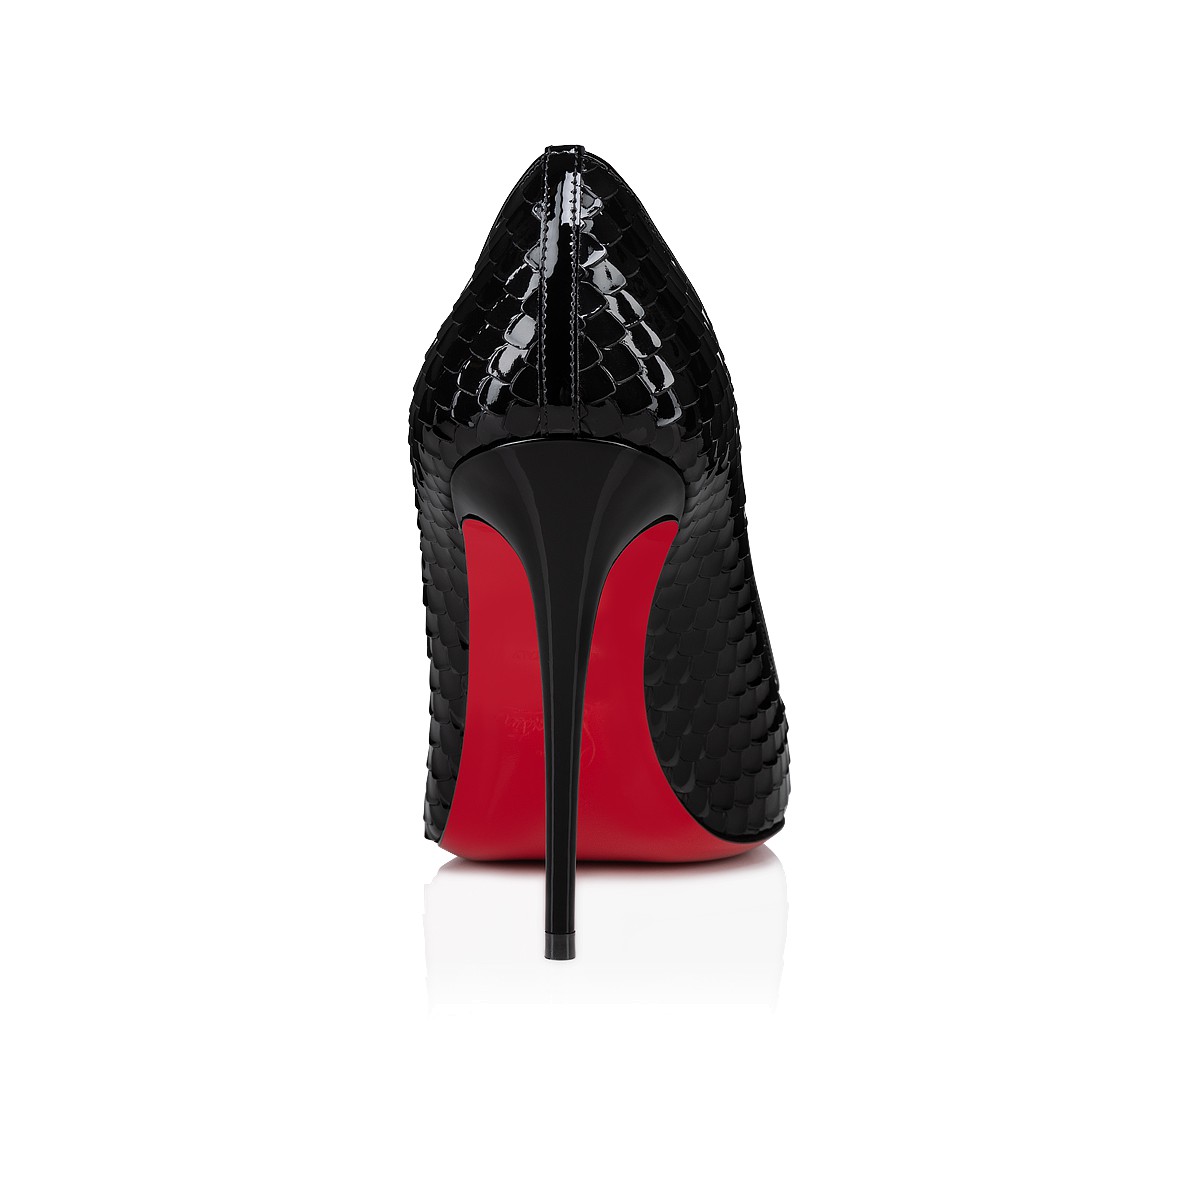 Kate 100 Black Patent calf leather - 鞋履 - Christian Louboutin